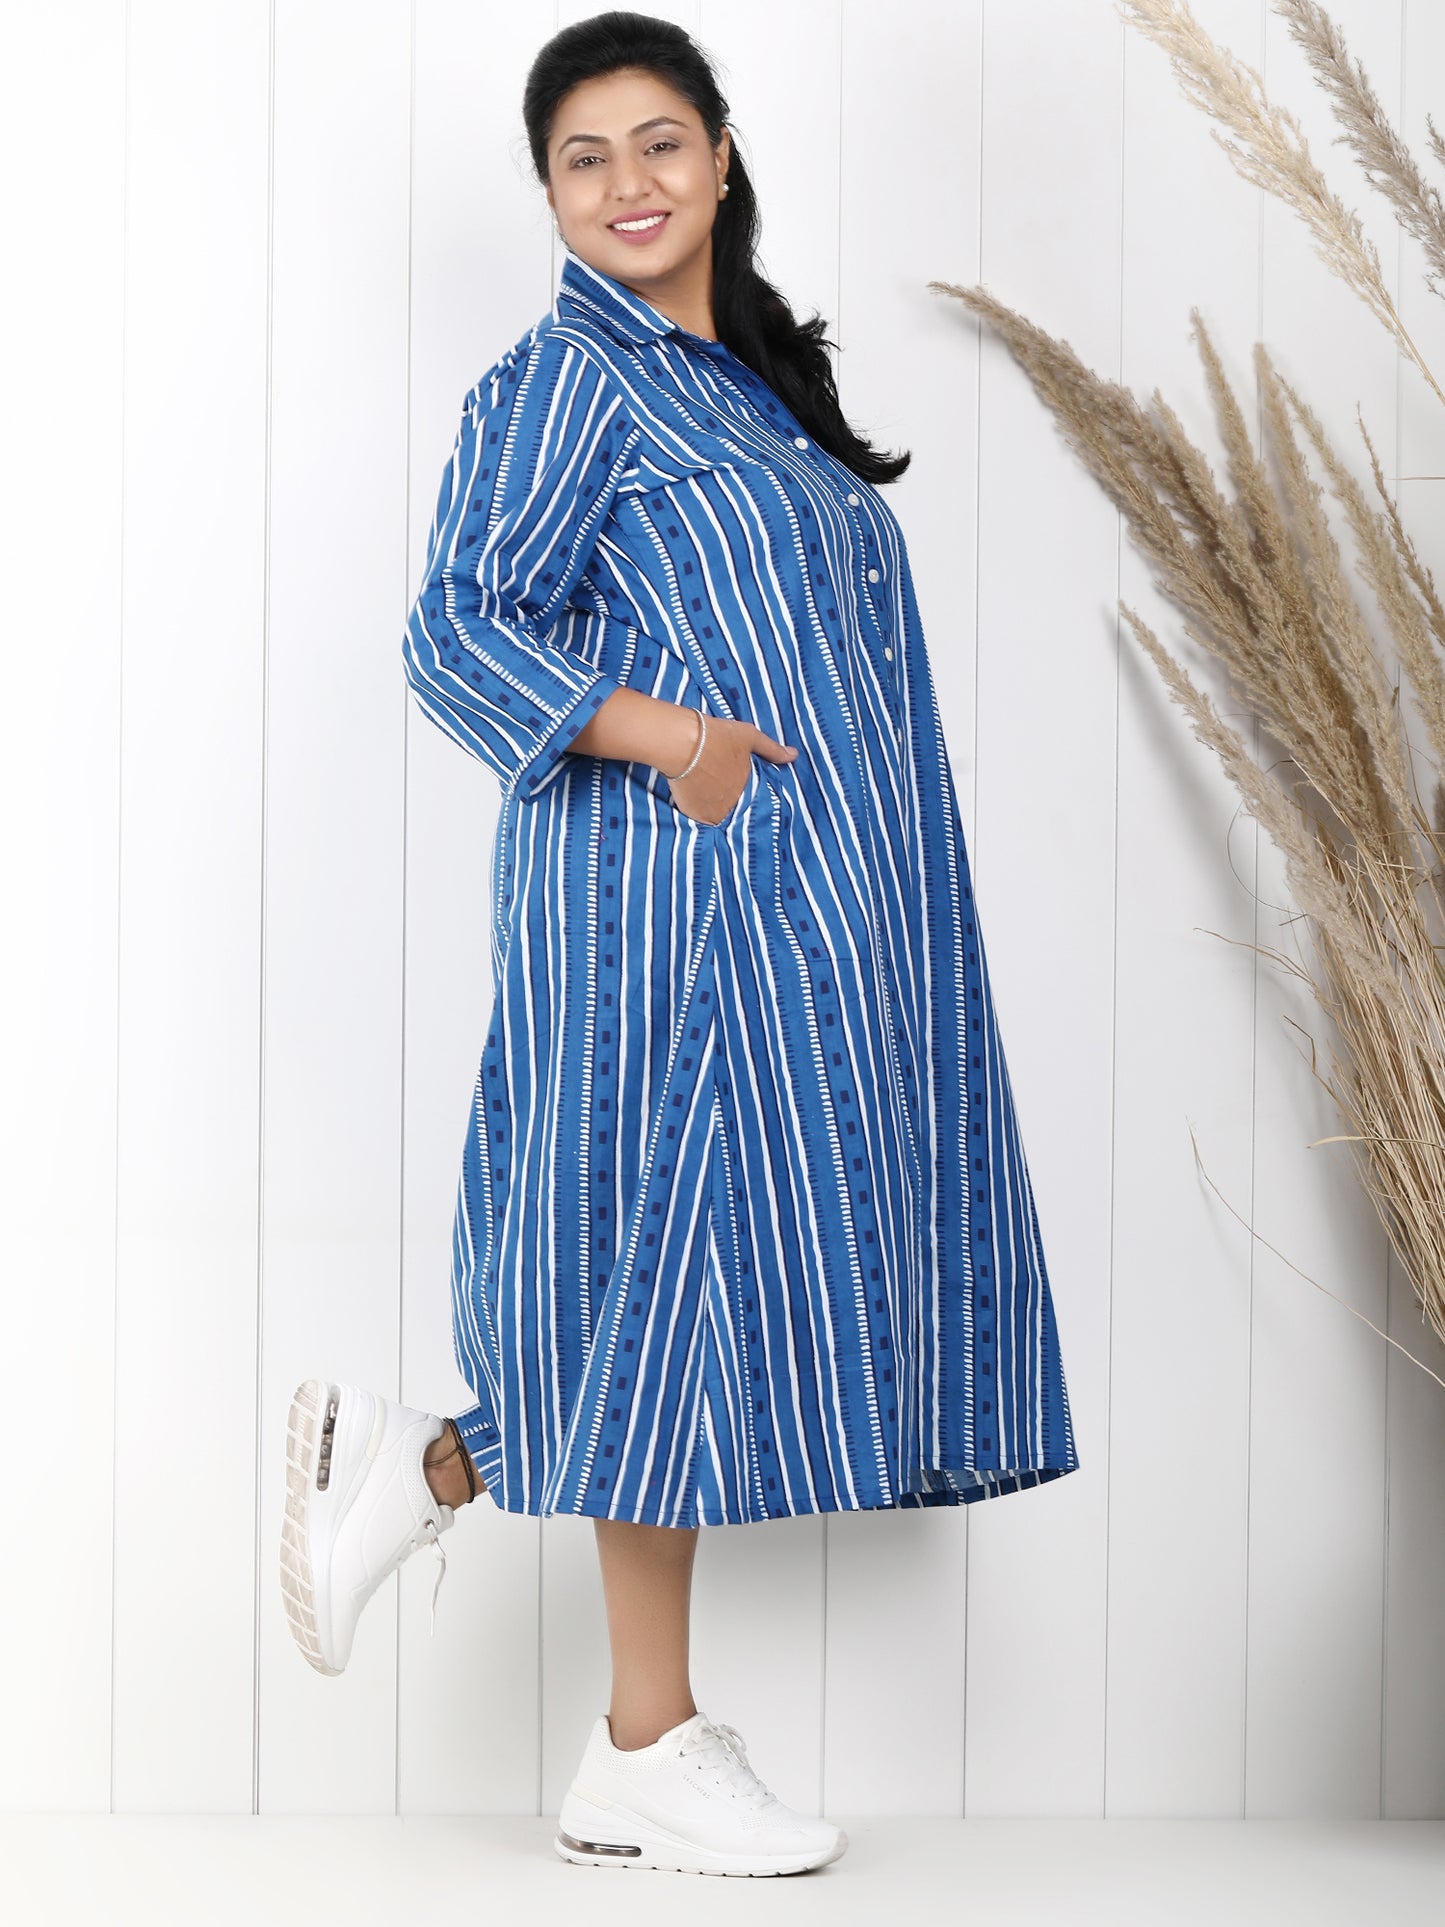 Blue striped dress for women